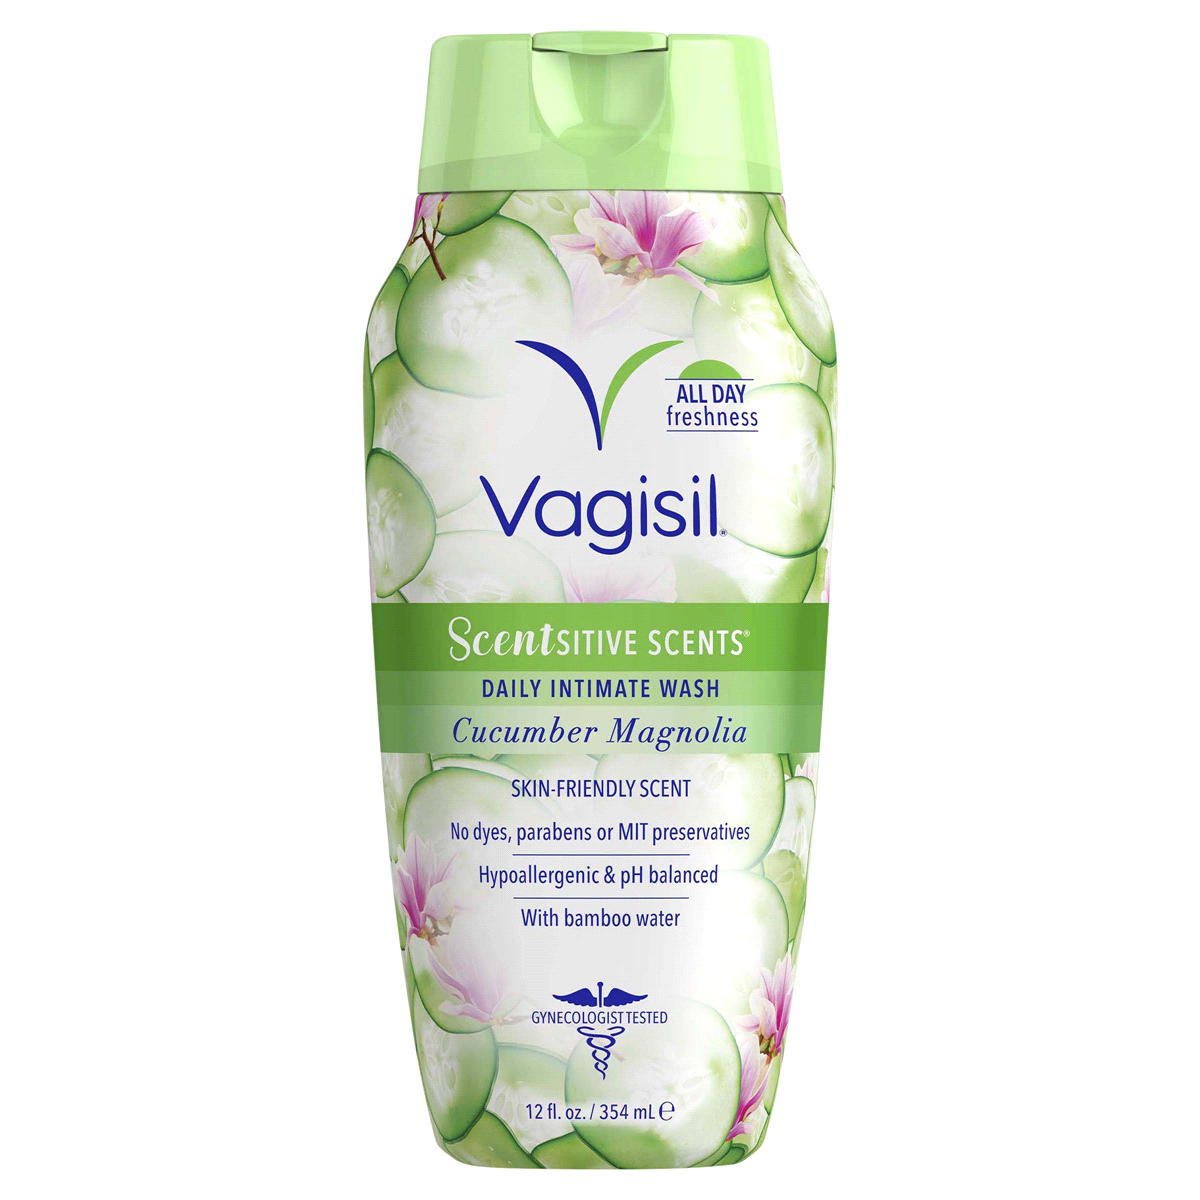 slide 1 of 21, Vagisil Scentsitive Scents Daily Intimate Wash, Cucumber Magnolia, 12 fl oz